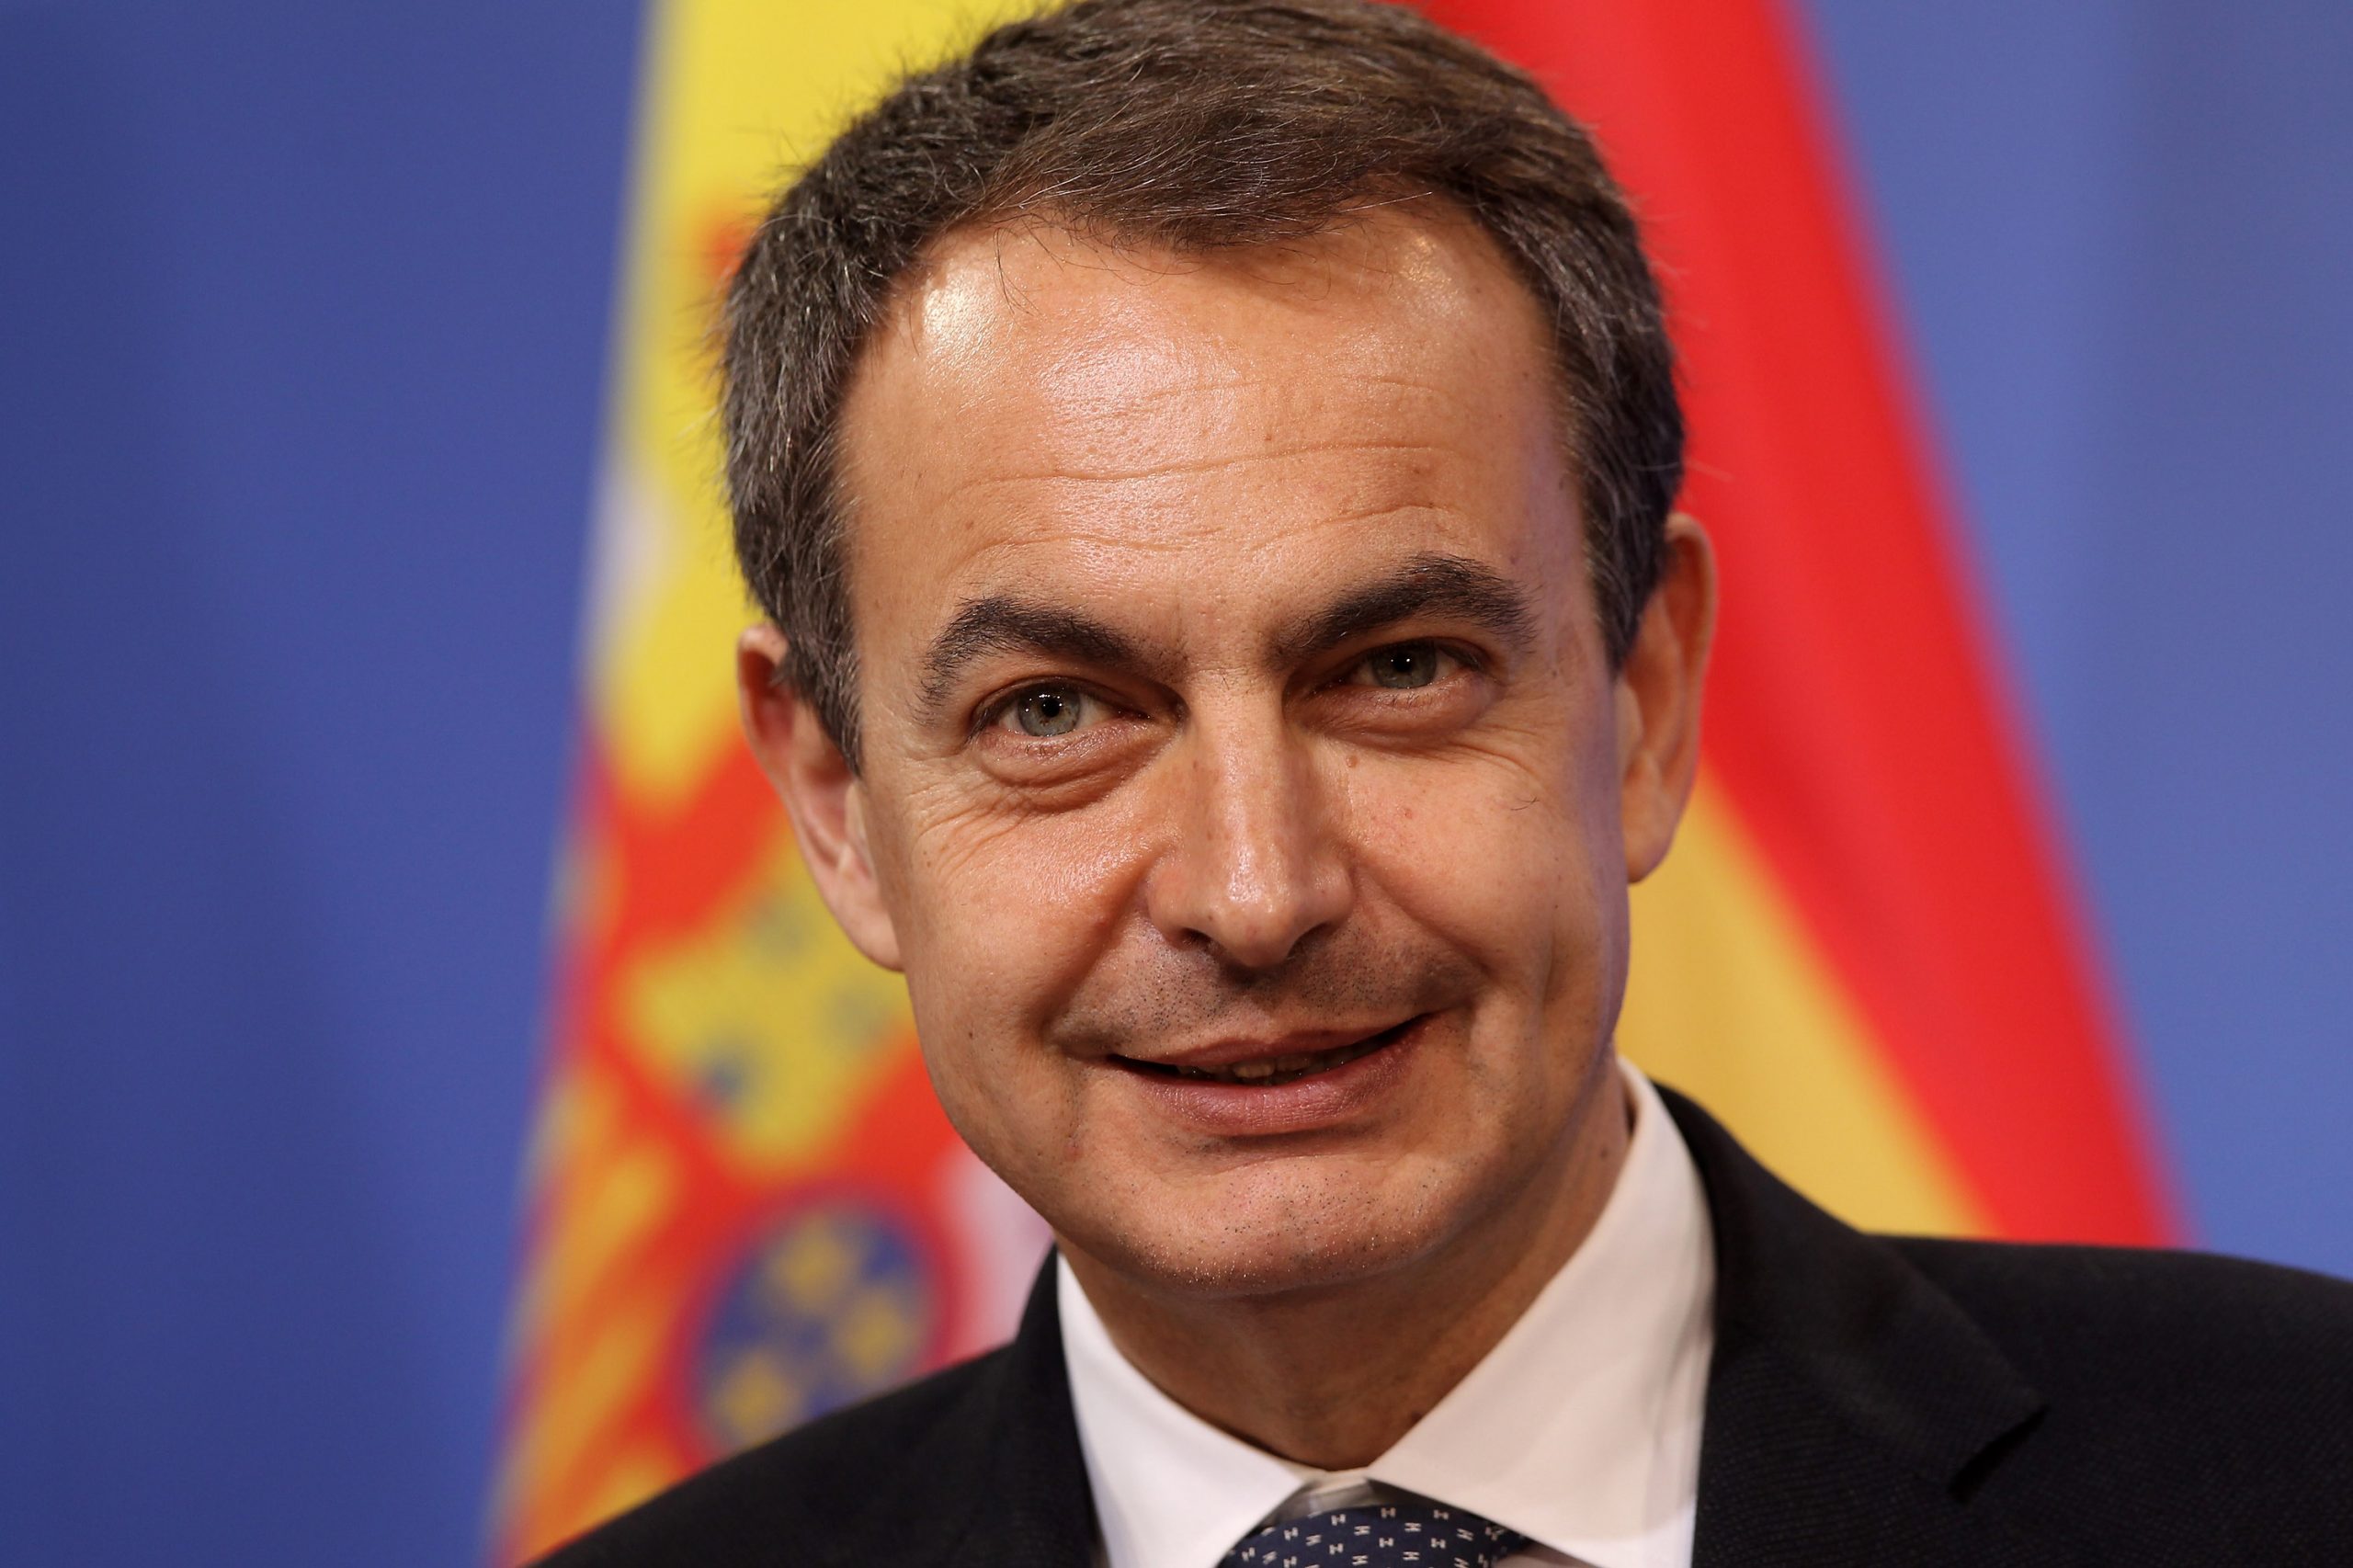 José Luis Rodríguez Zapatero photo